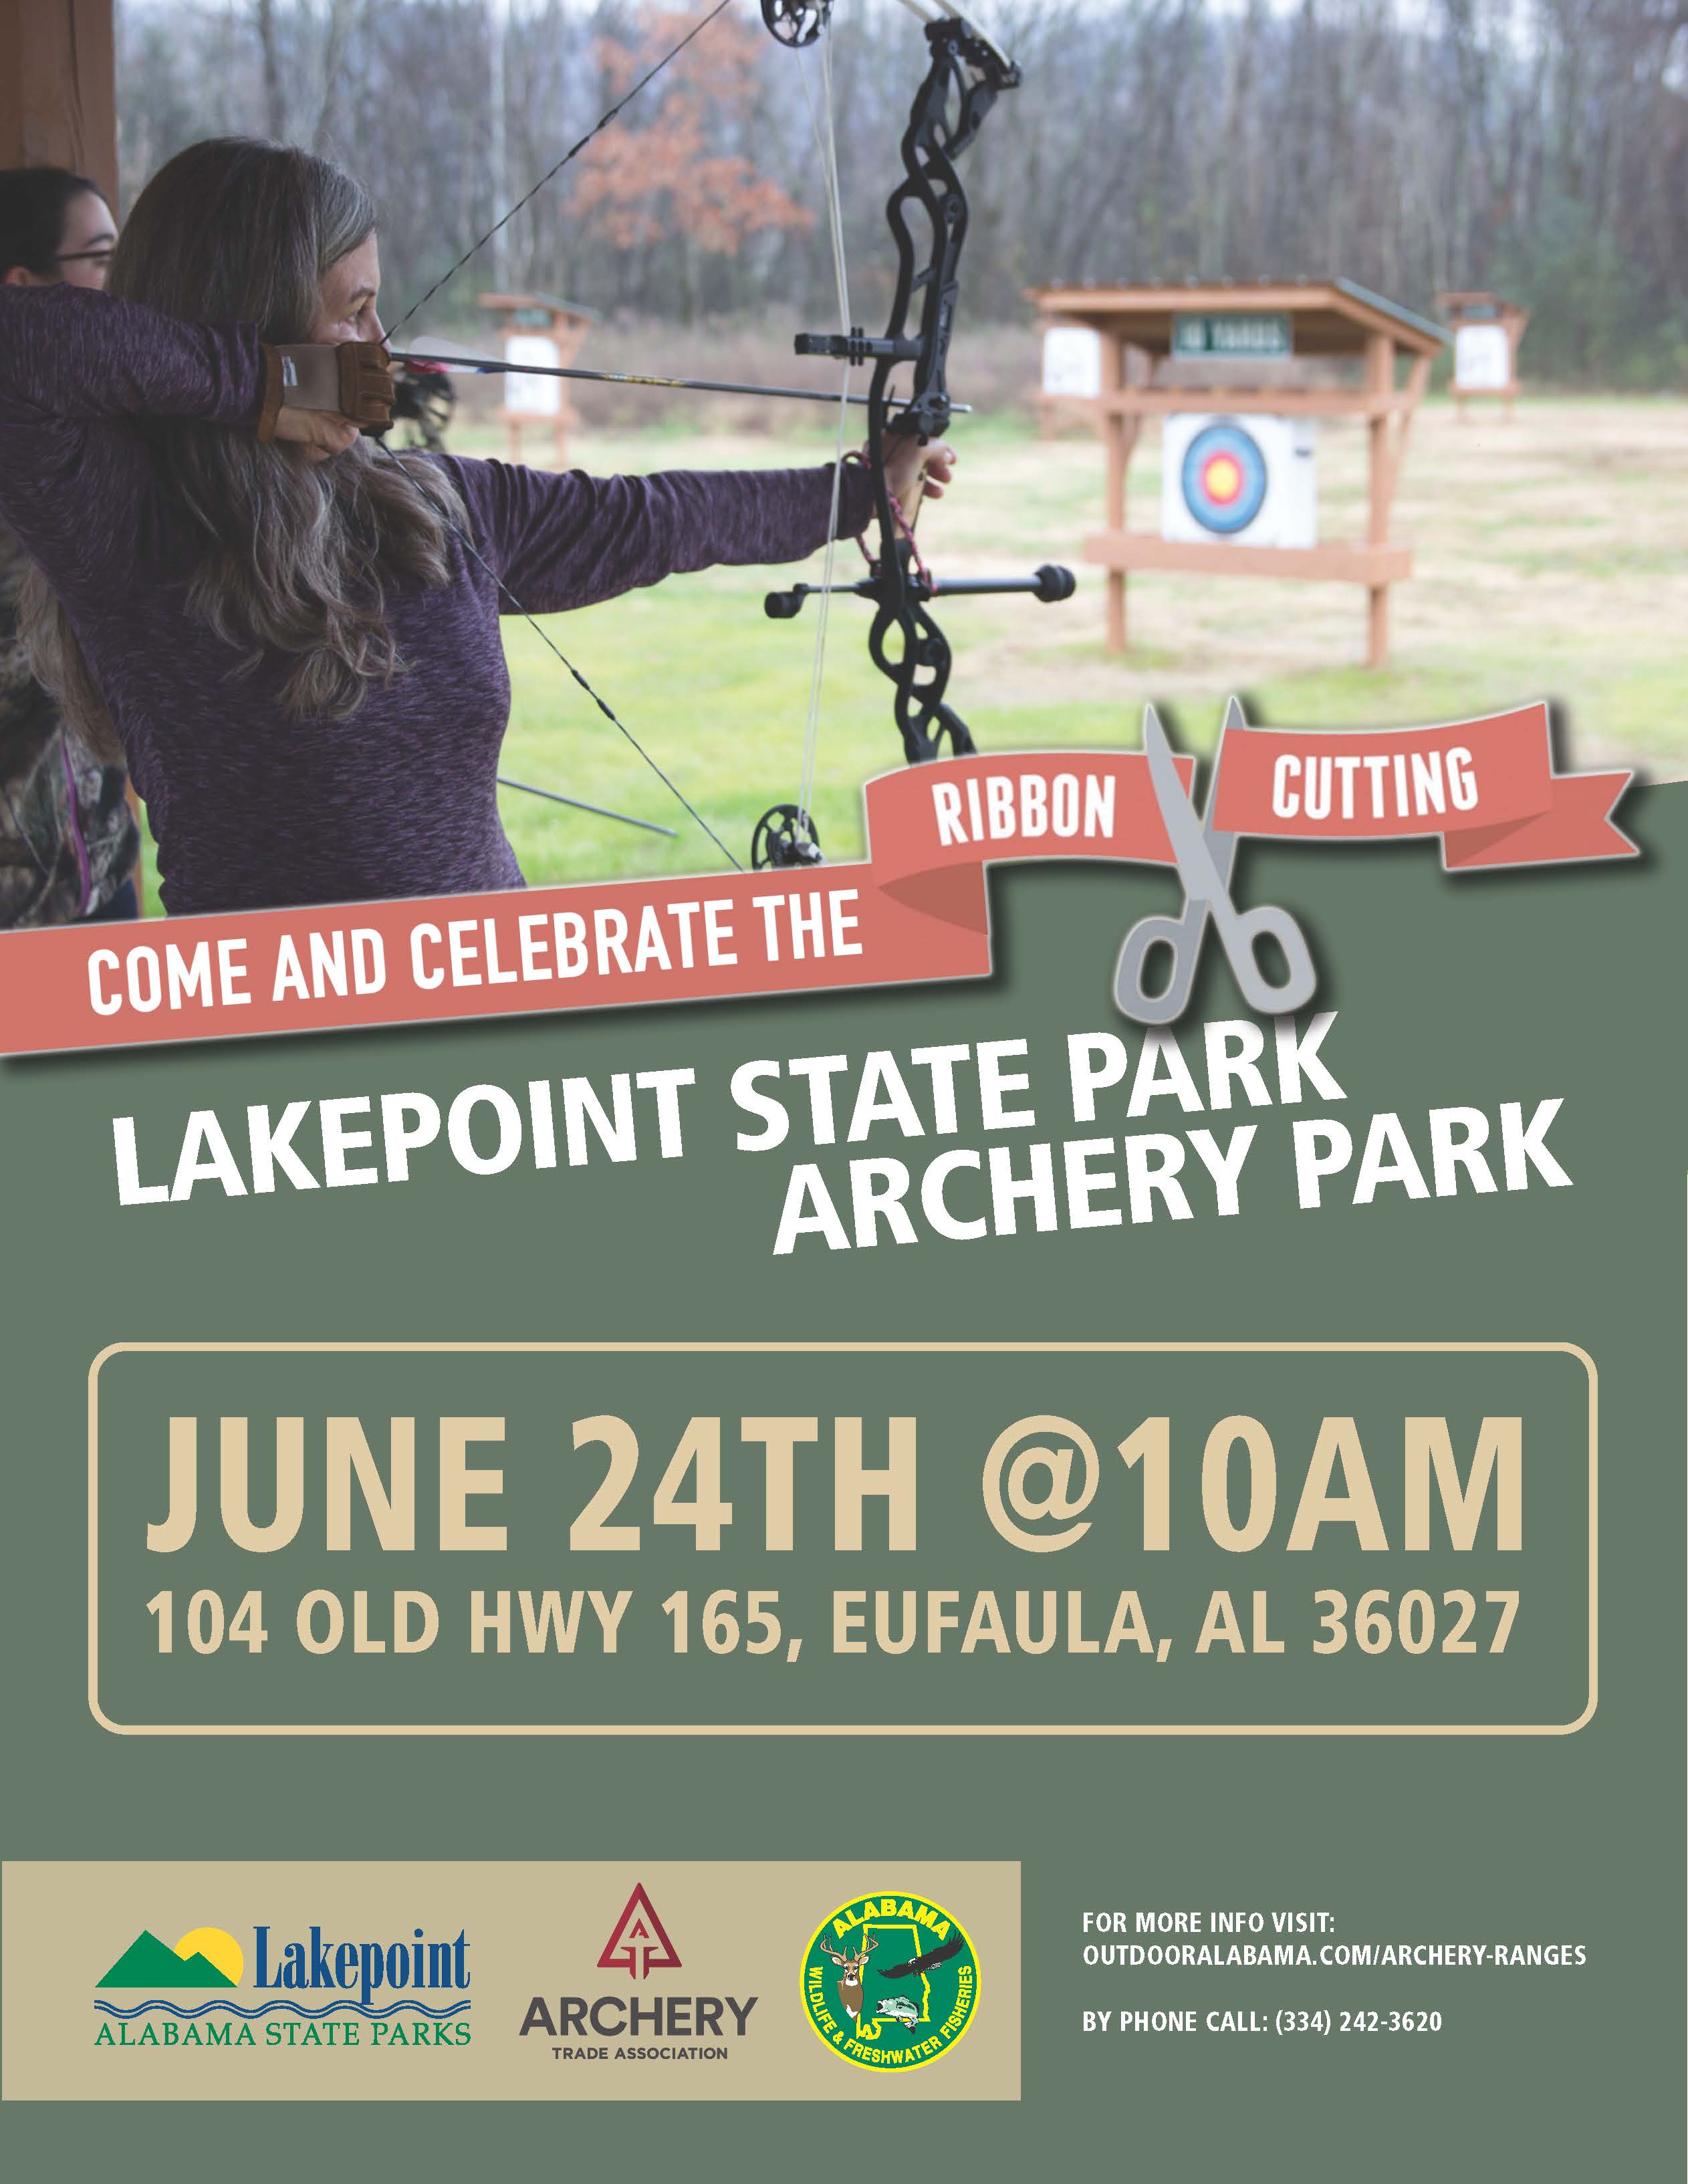 Lakepoint State Park Archery Park